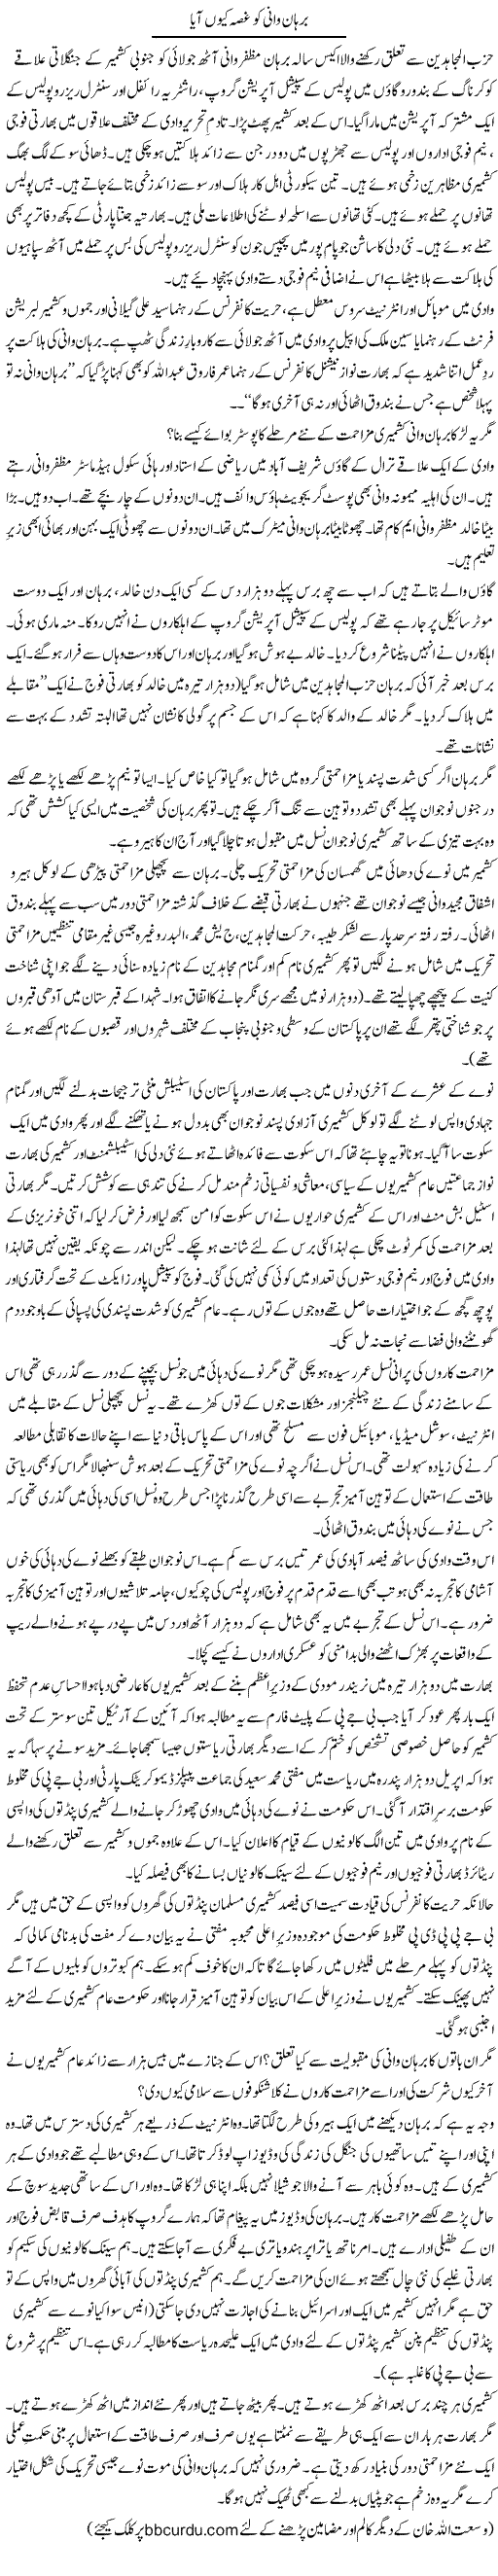 Burhan Wani Ko Ghussa Kion Aya | Wusat Ullah Khan | Daily Urdu Columns